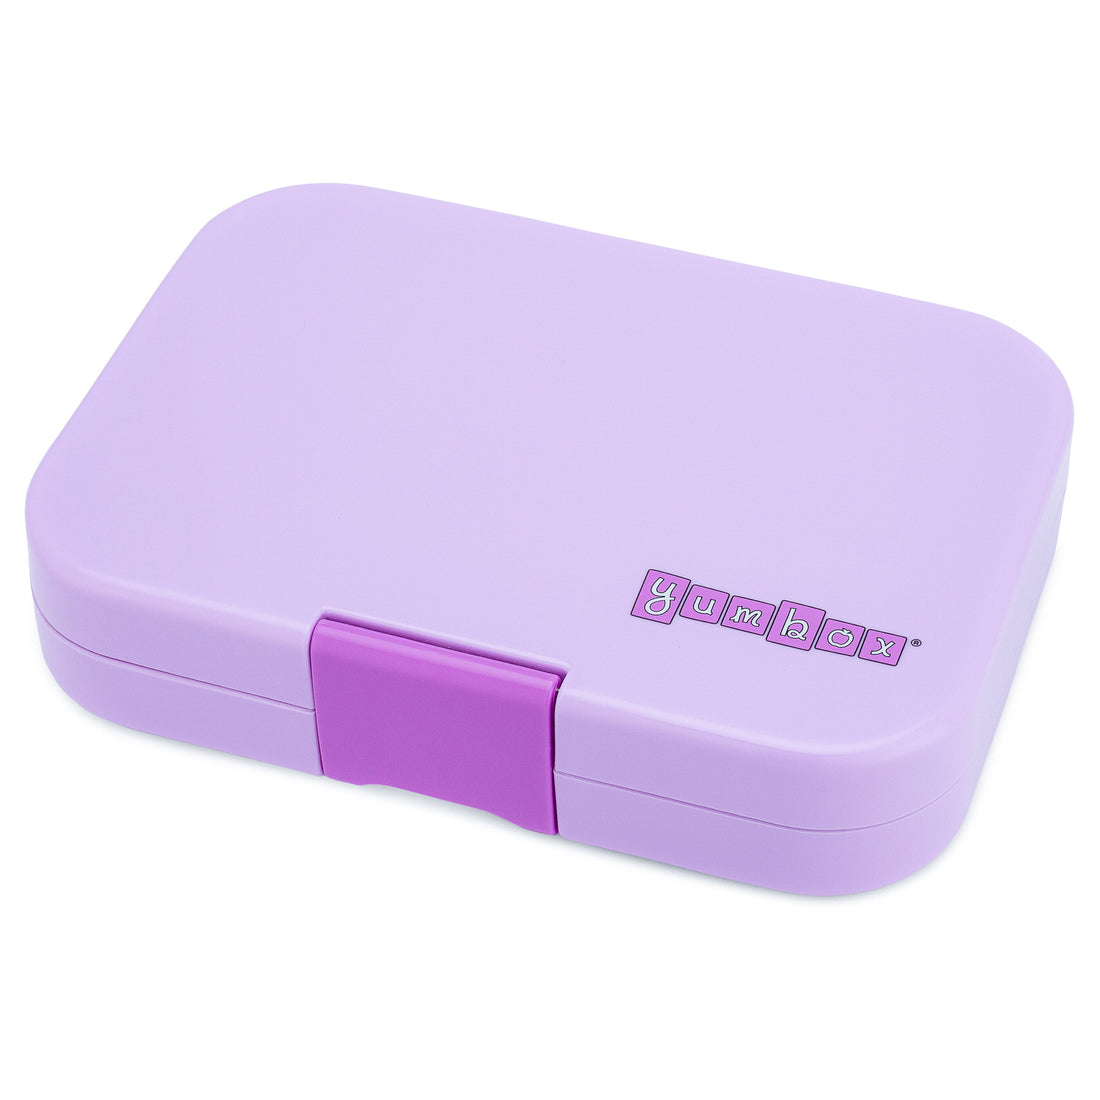 yumbox-original-6-compartment-lunch-box-lulu-purple-paris-yumb-lpi202210p- (3)